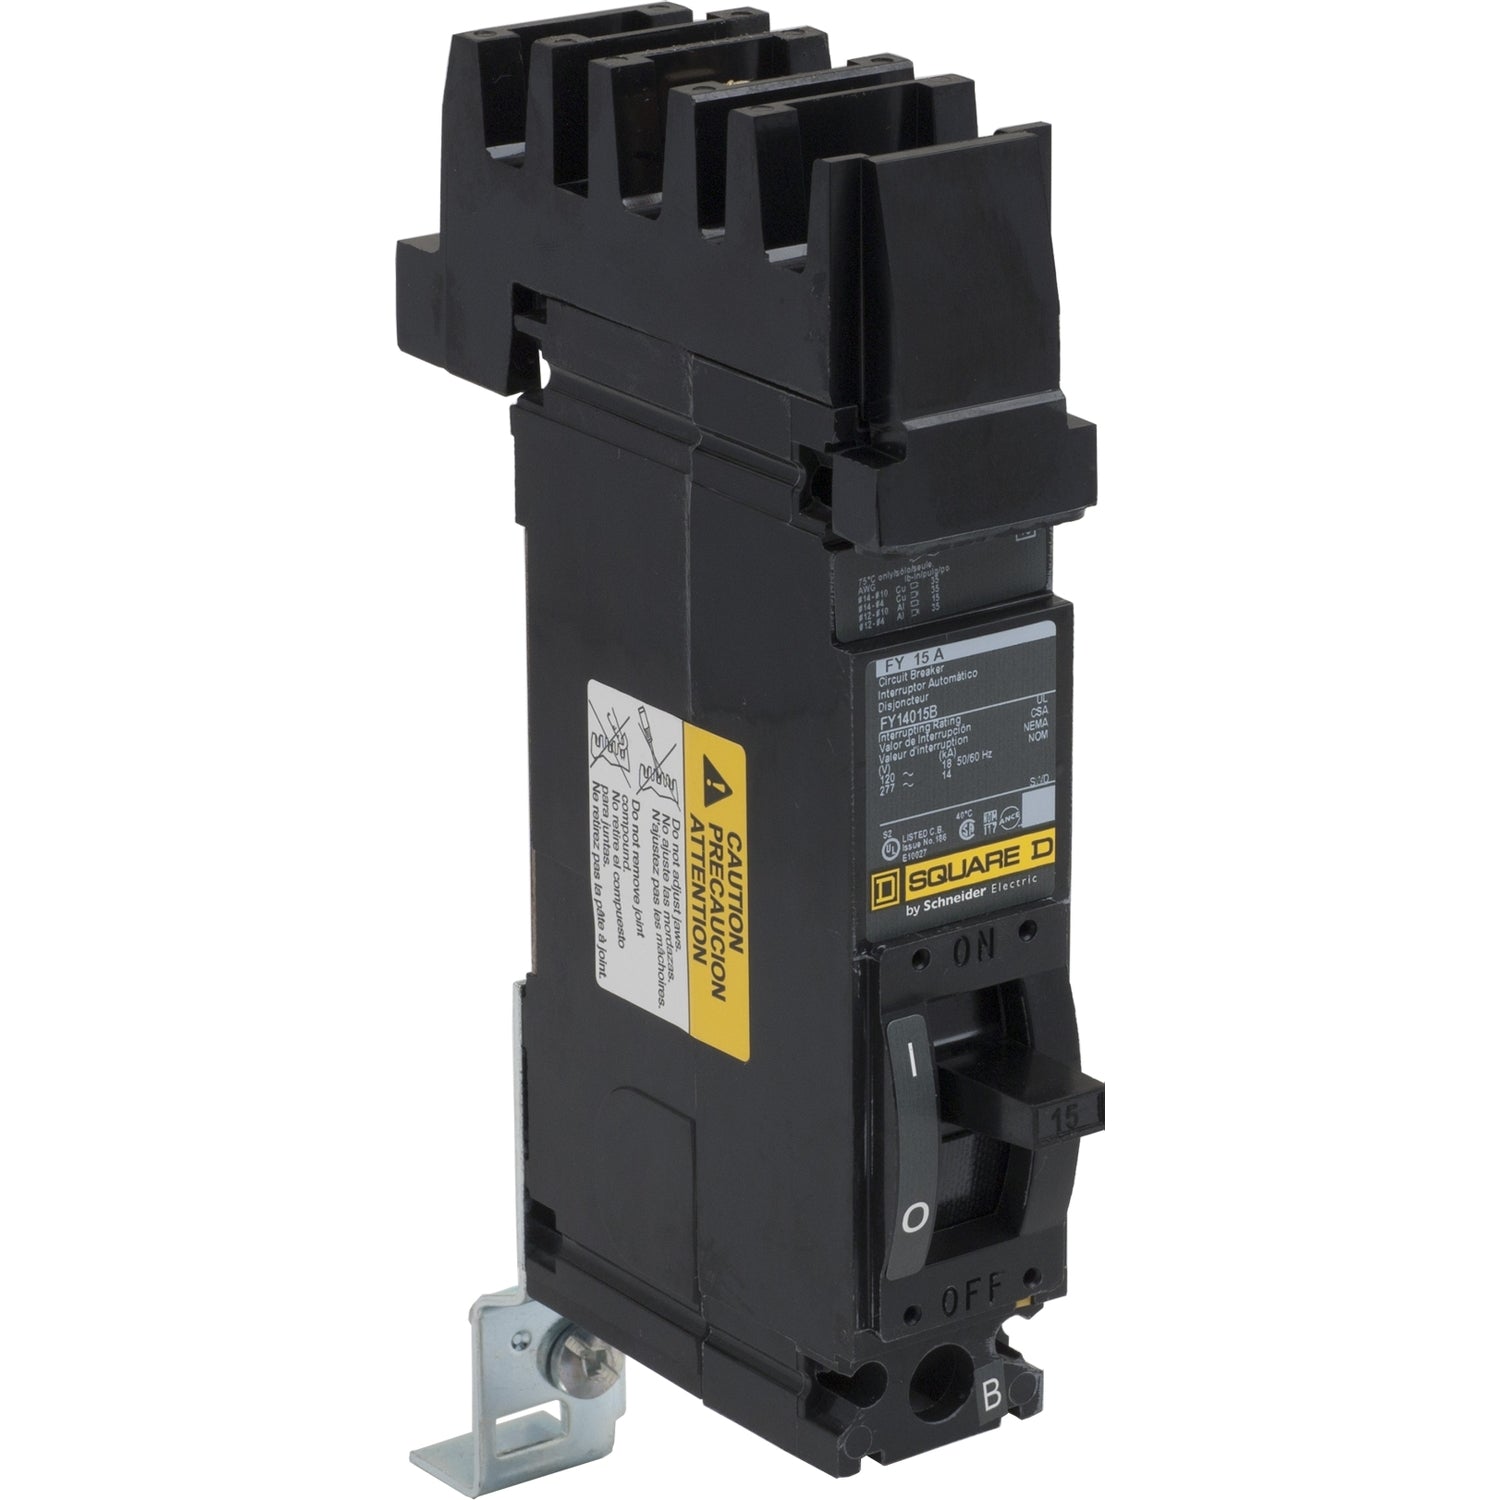 FY14015B - Square D 15 Amp 1 Pole 277 Volt Plug-In Molded Case Circuit Breaker